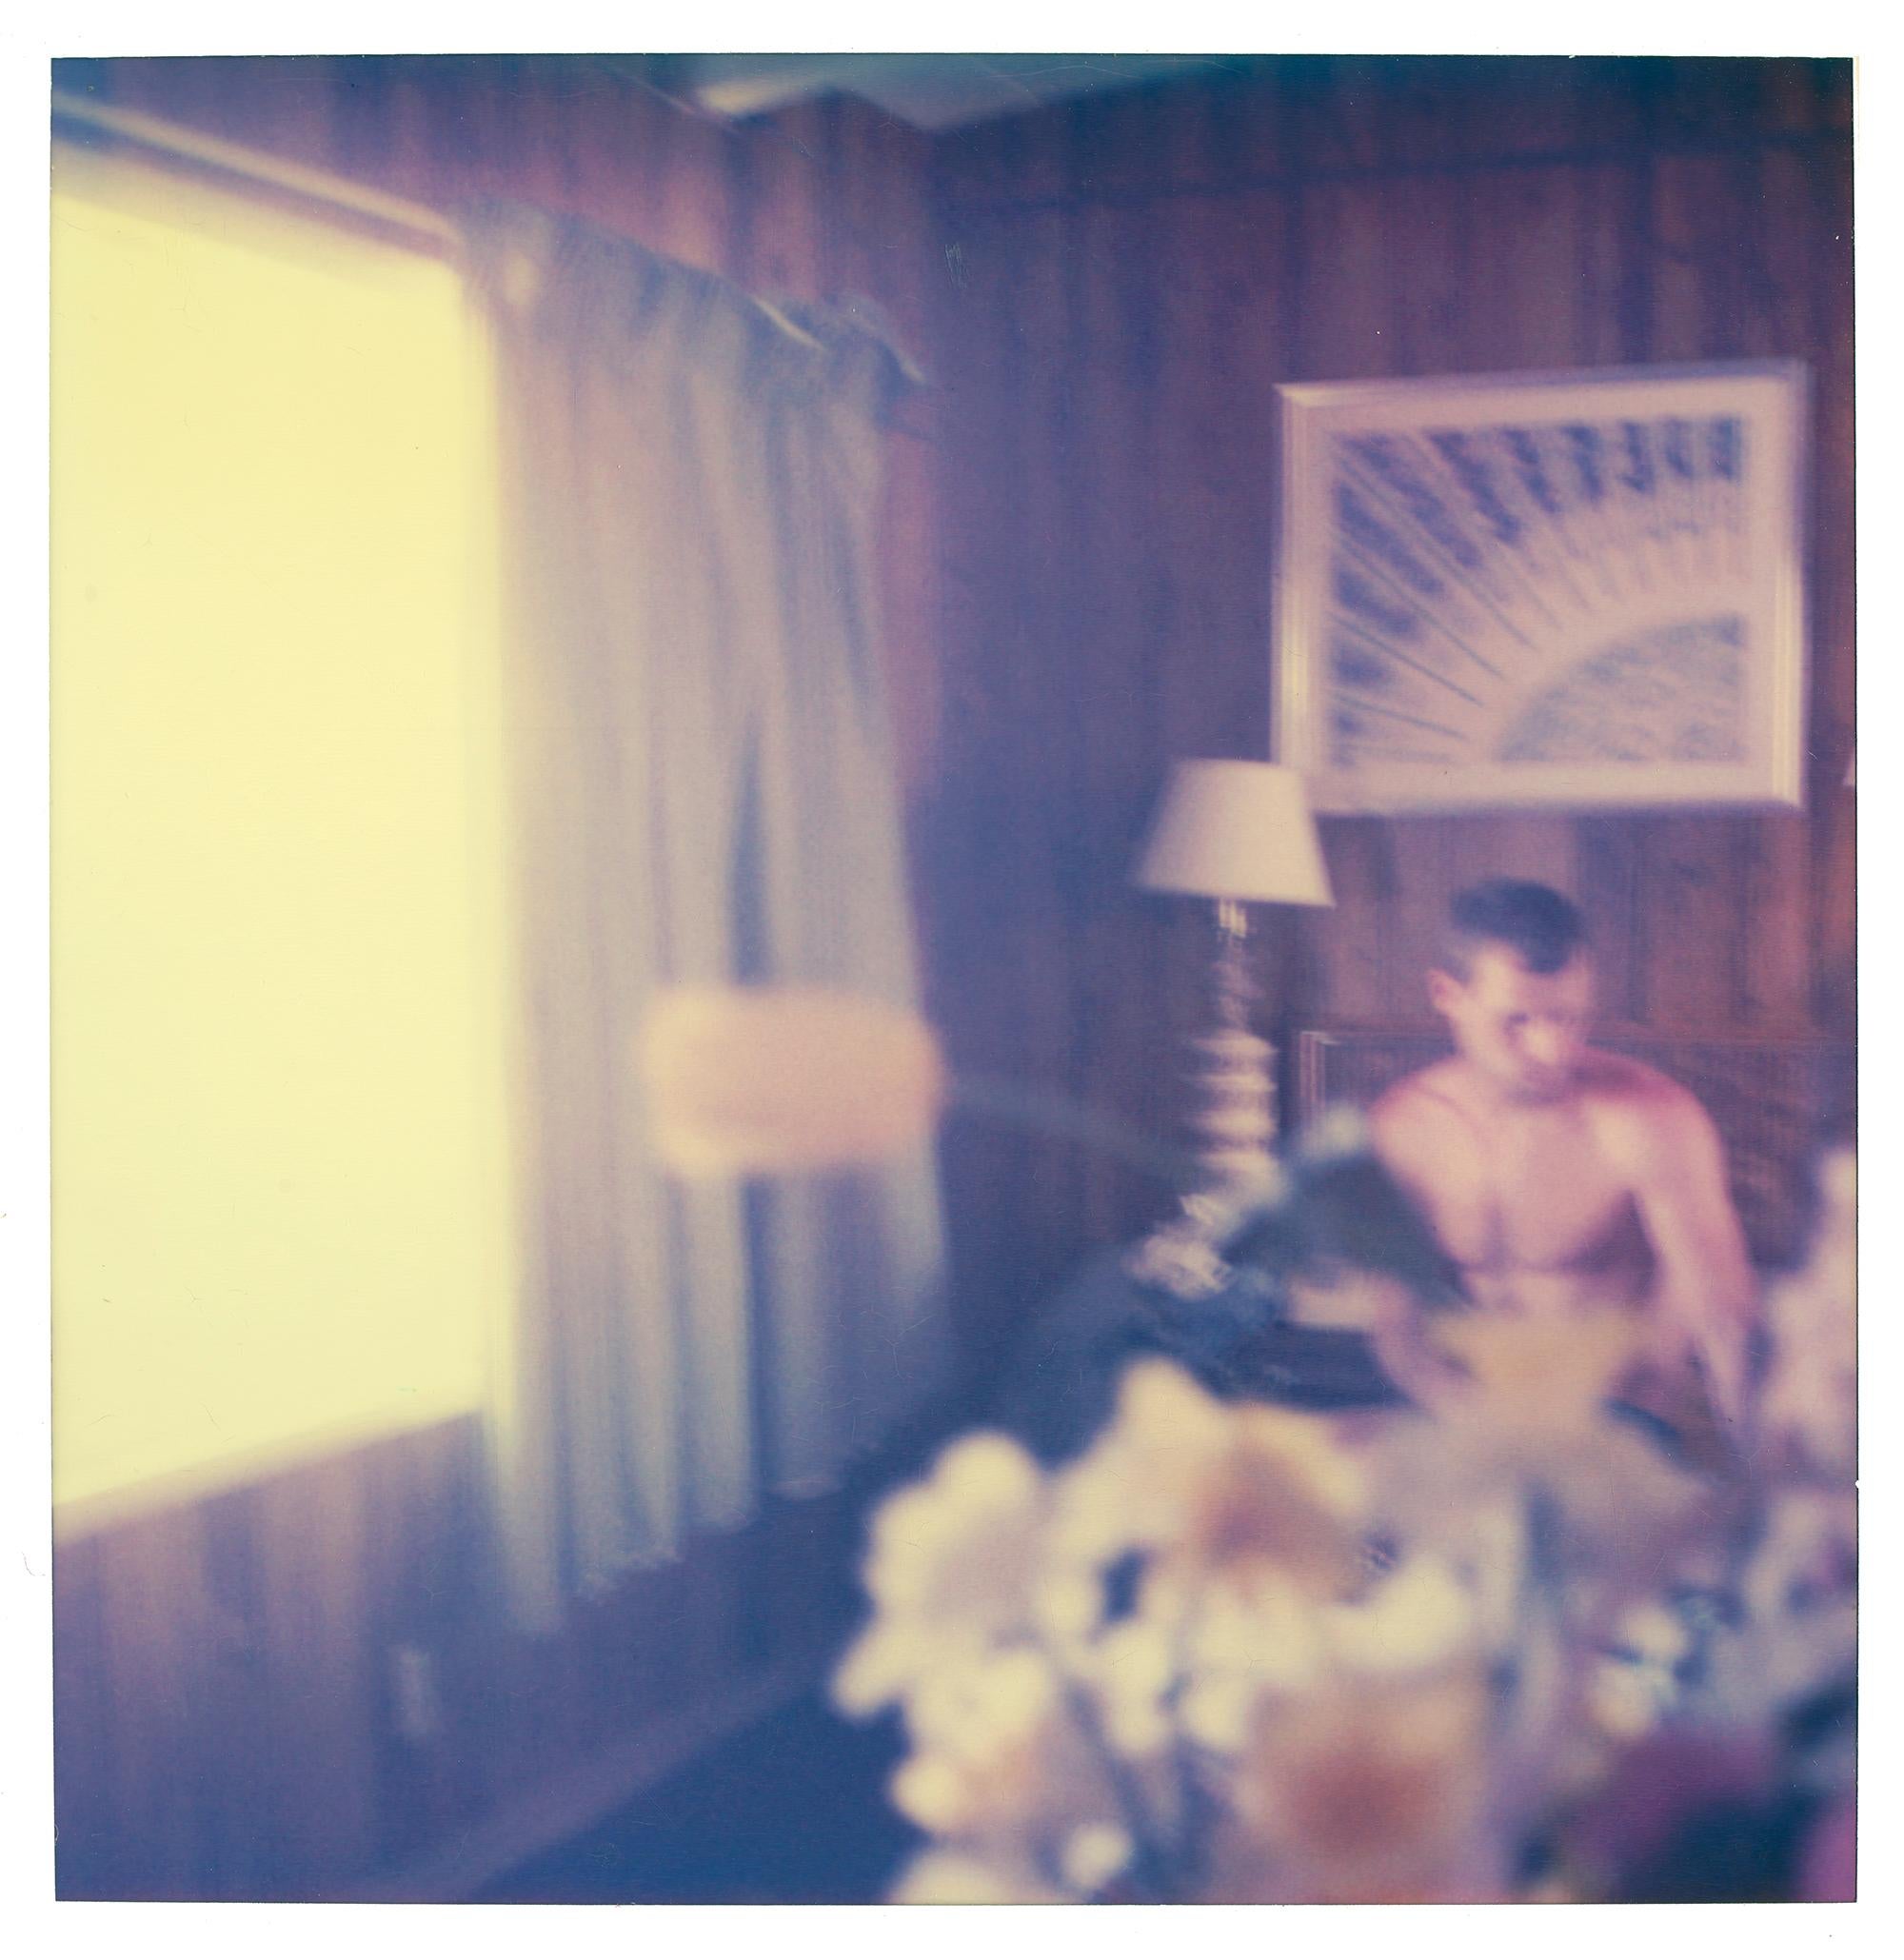 Stefanie Schneider Nude Photograph - Outtake (29 Palms, CA) - analog, Polaroid, Contemporary, 20th Century